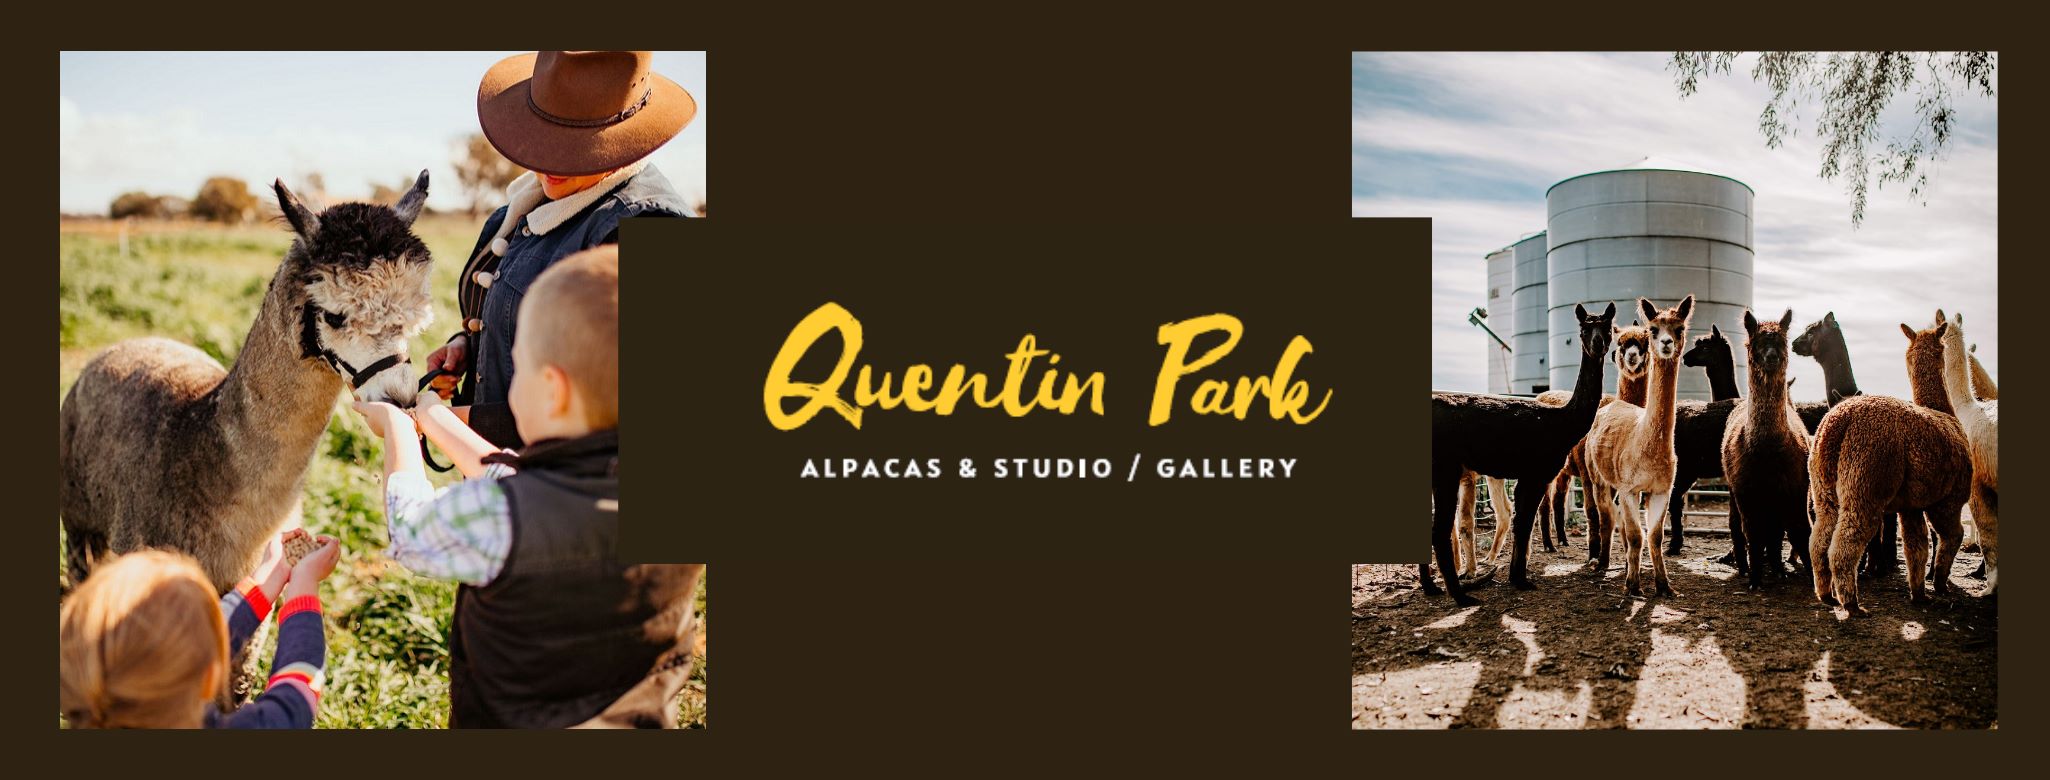 Quentin Park Alpacas